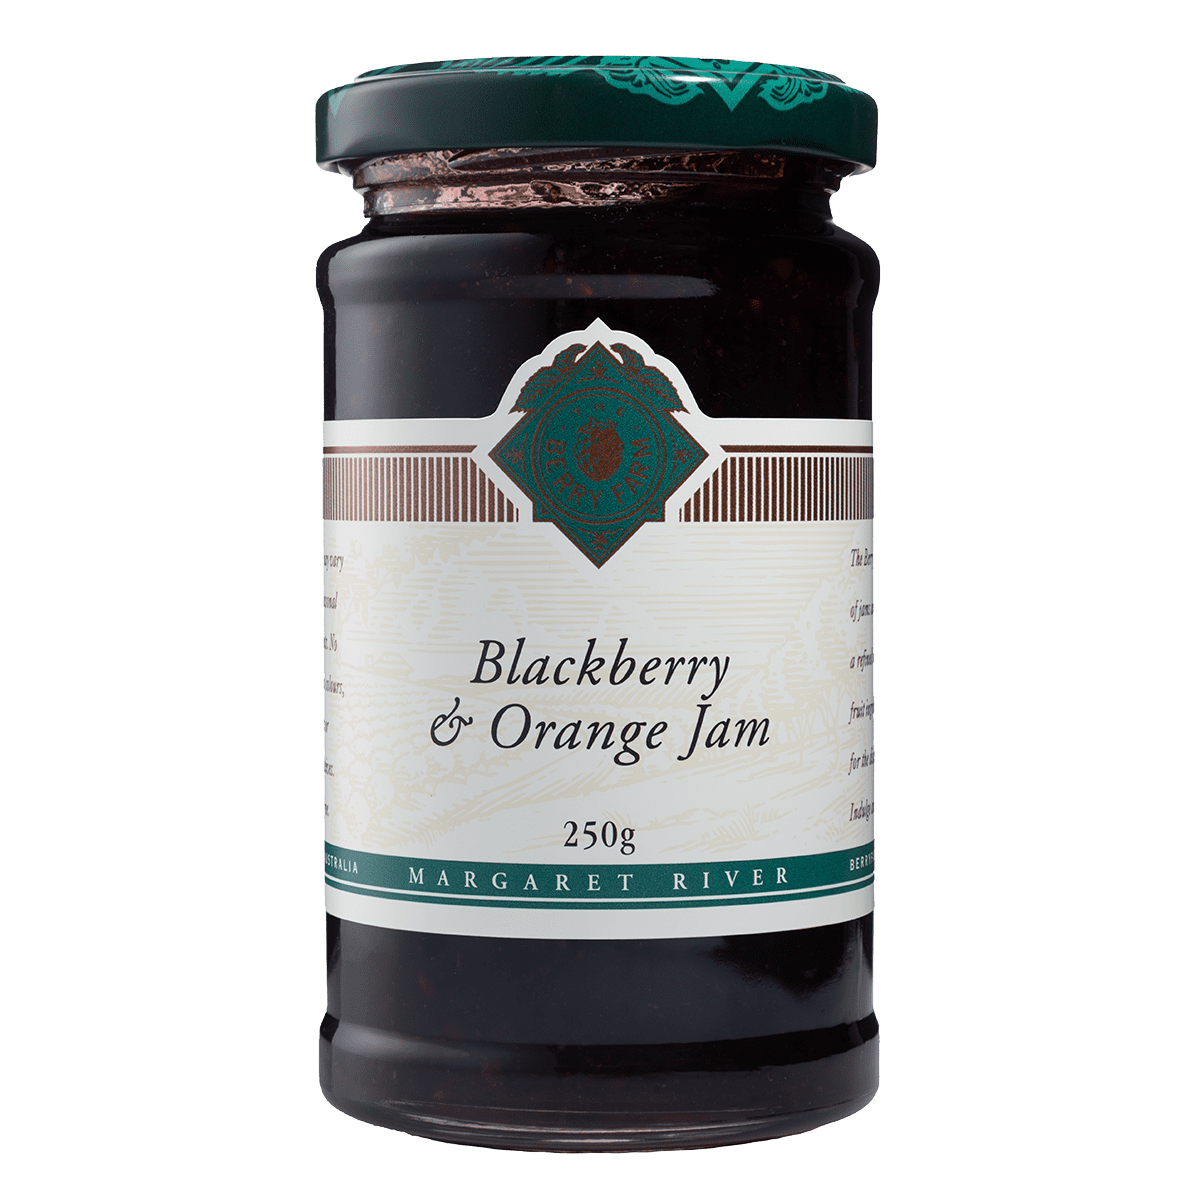 A jar of Blackberry & Orange Jam